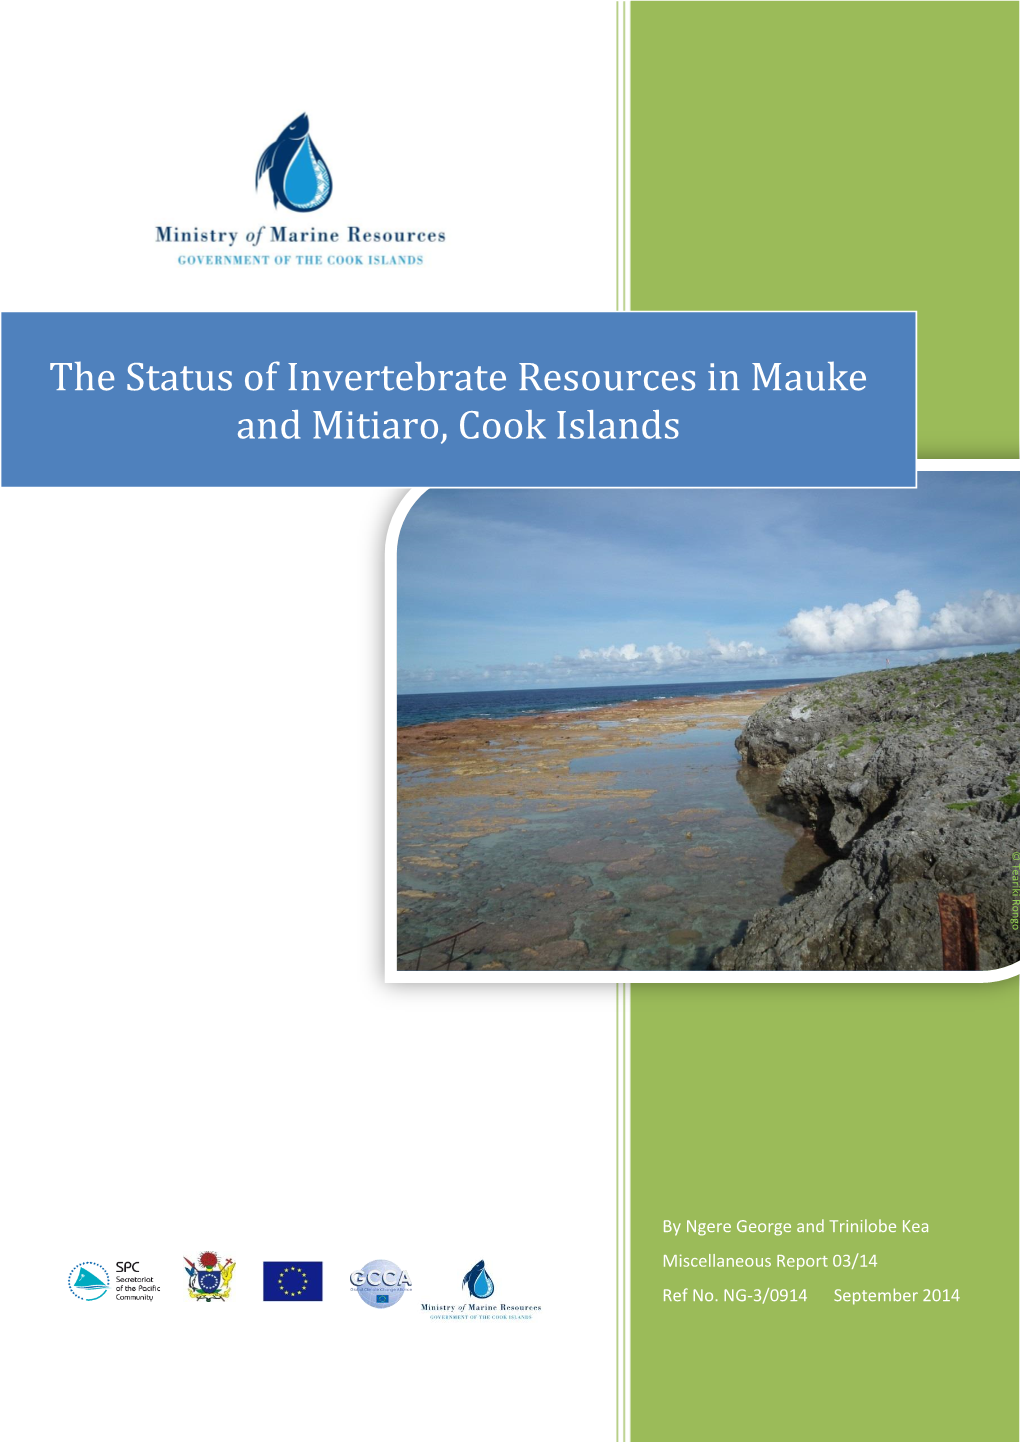 Report on the Status of Invertebrate Resources in Mauke and Mitiaro